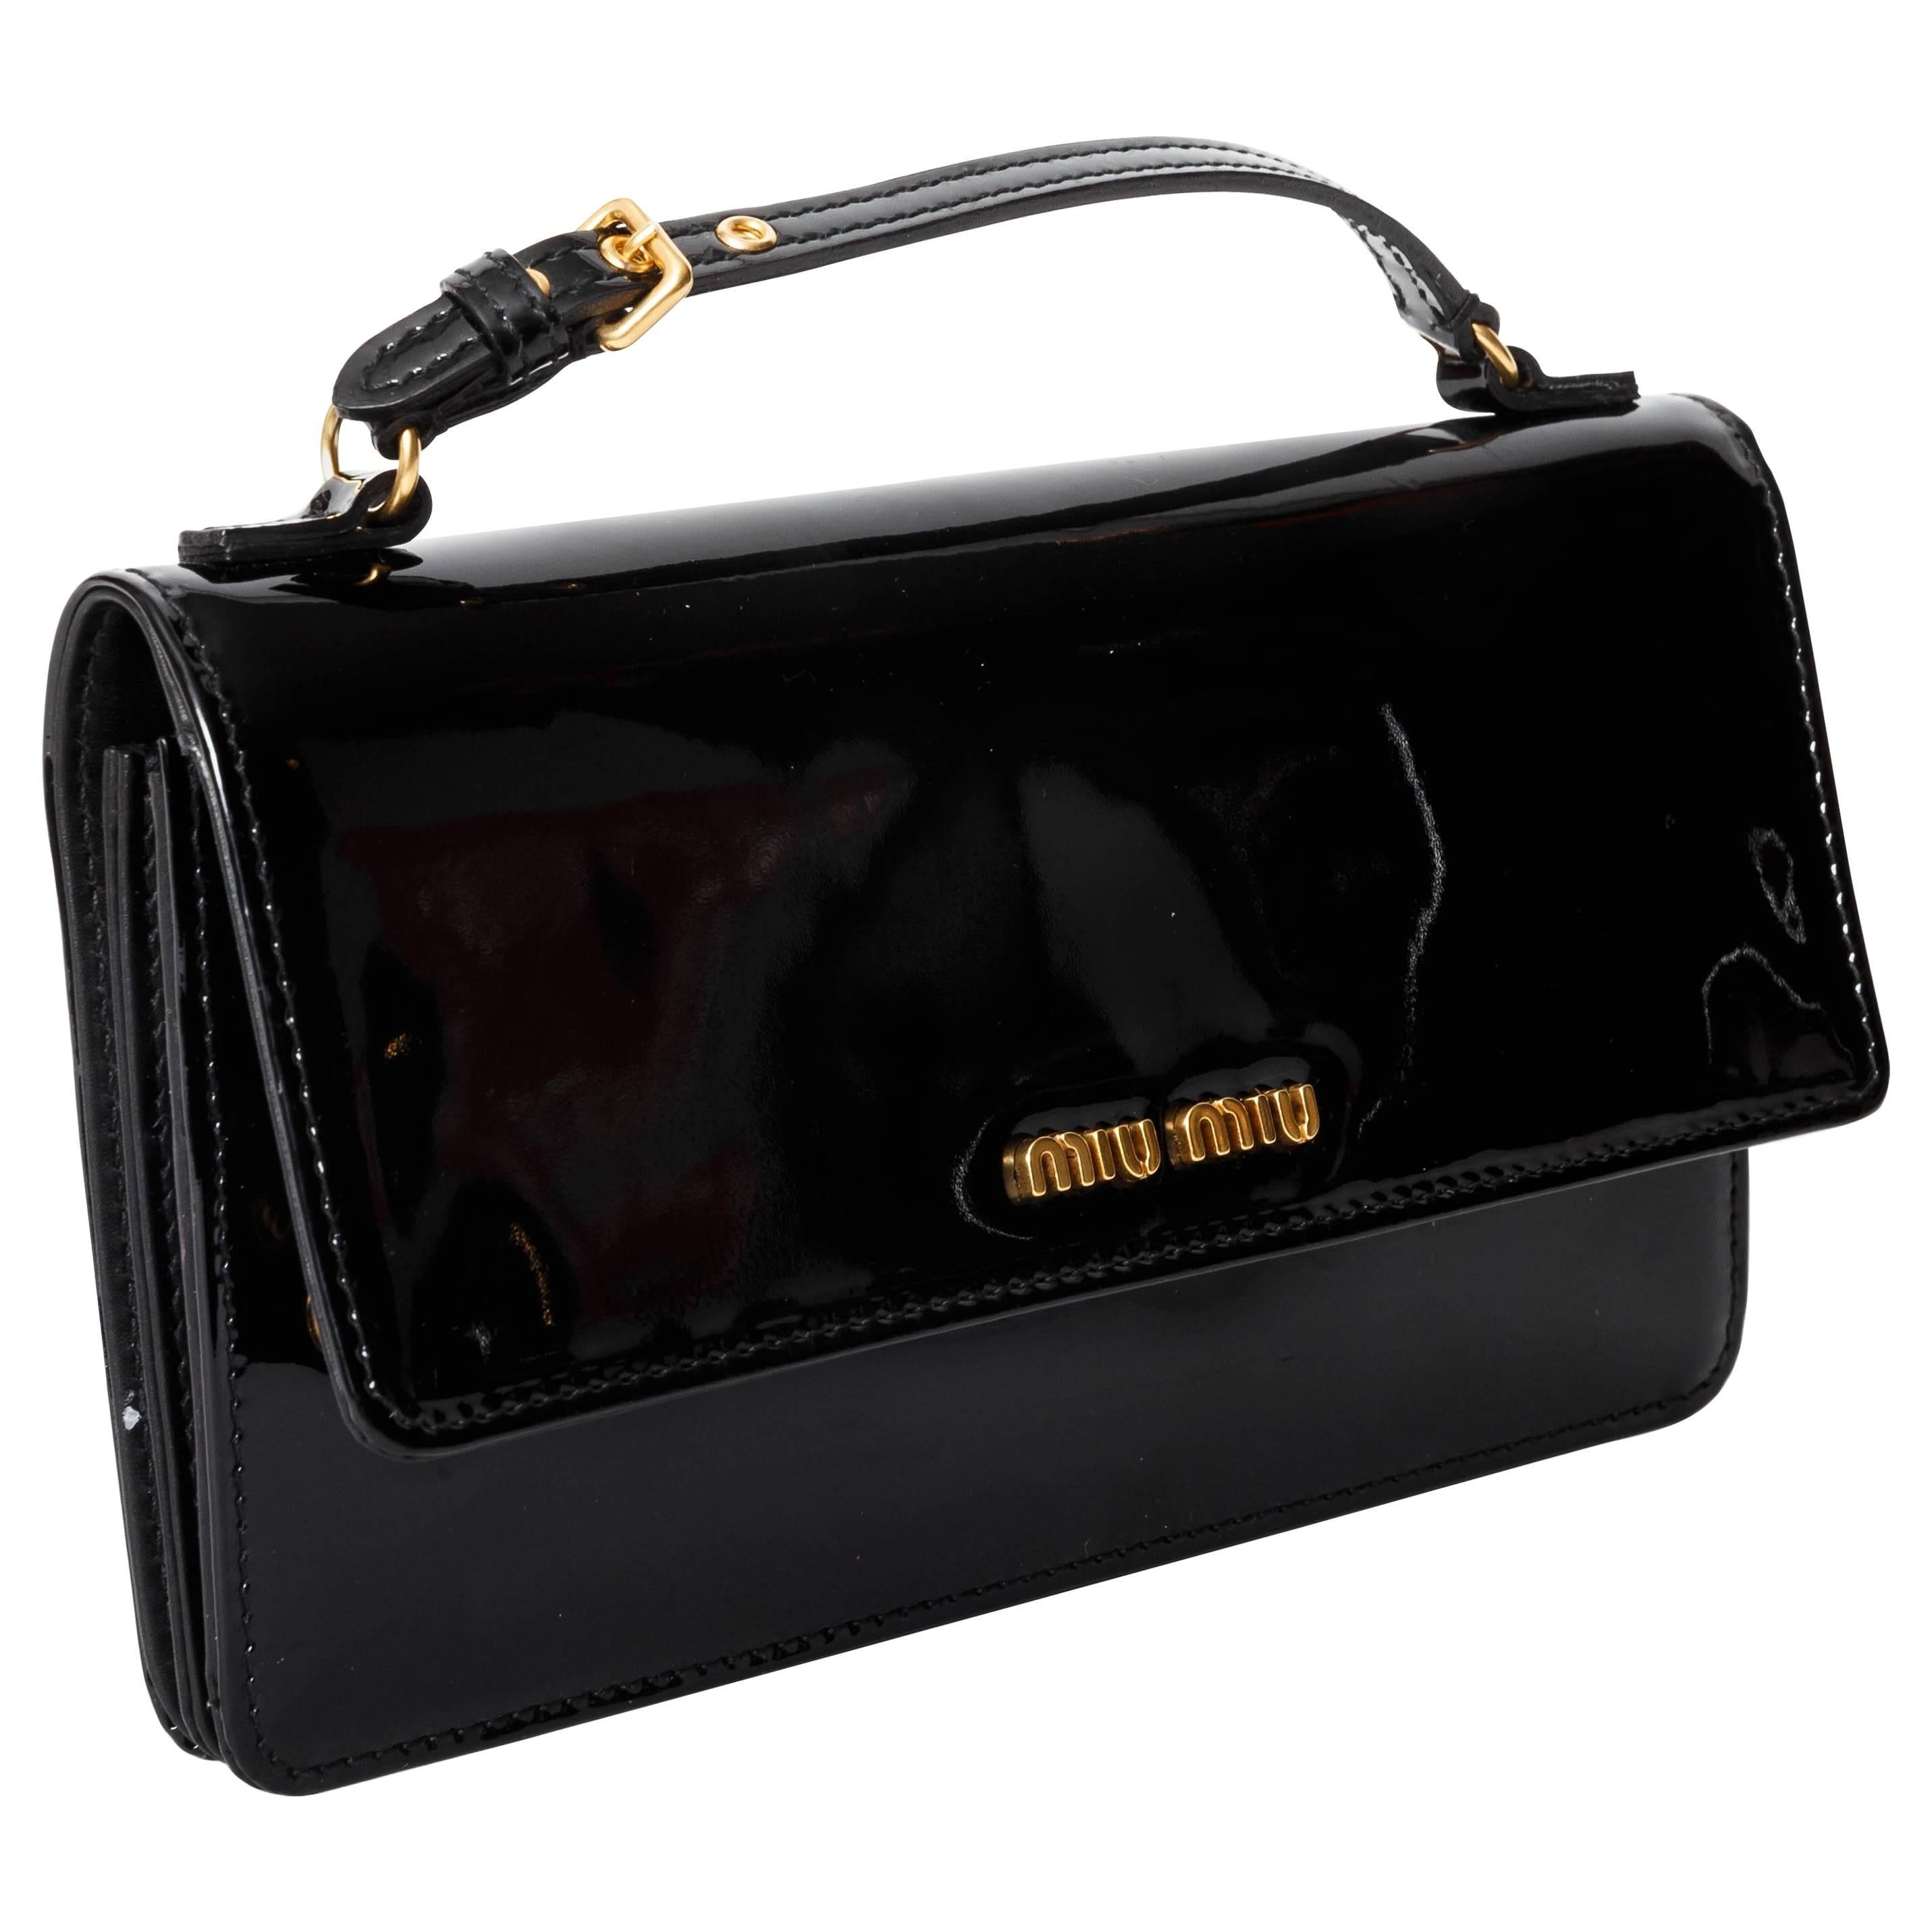 Adorable Miu Miu Handbag in Black Patent Leather 
Double Snap Closure 
Zip Opening